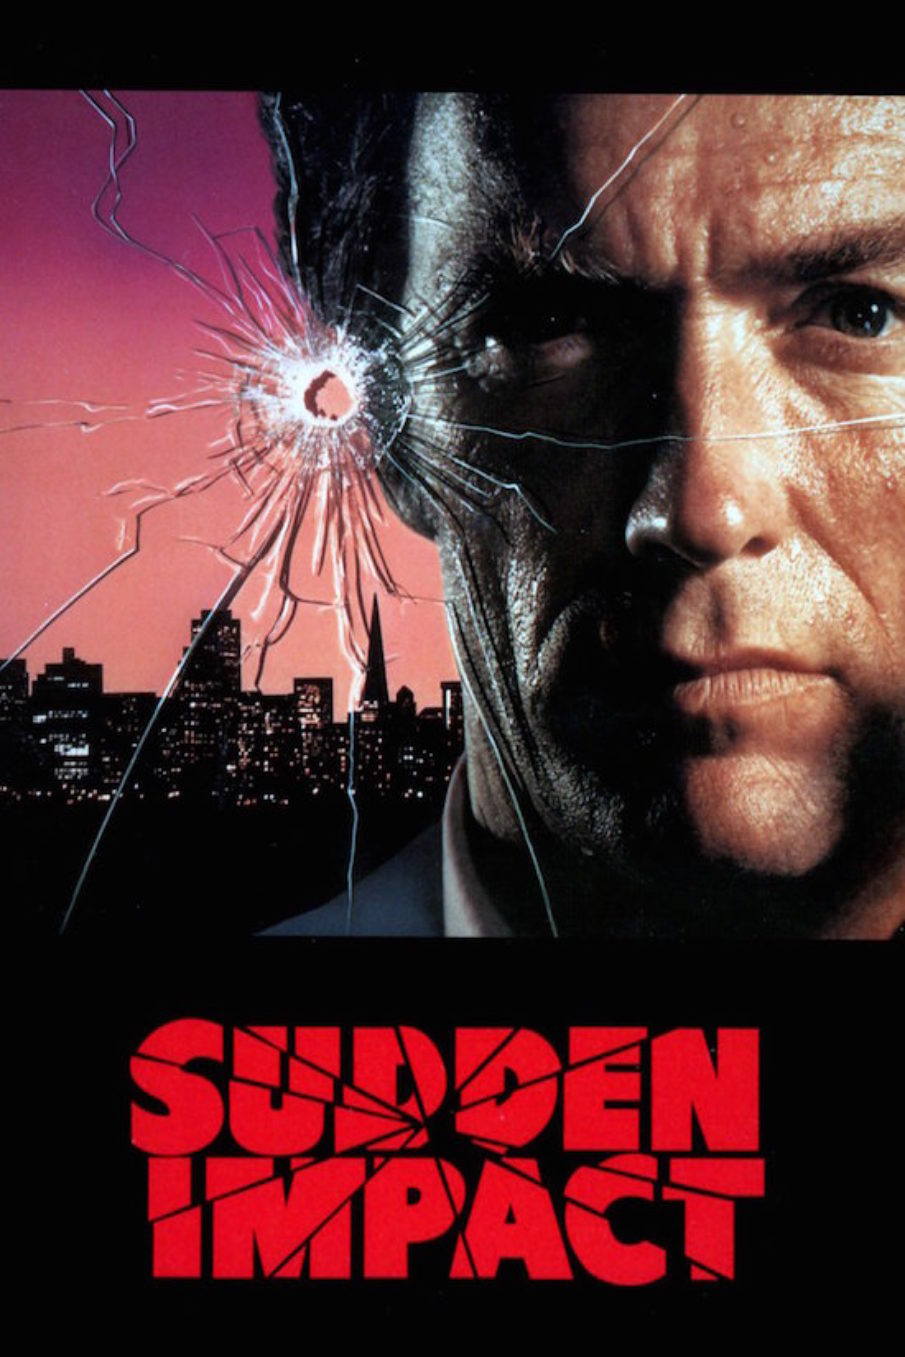 Movie Diary: Sudden Impact (1983)